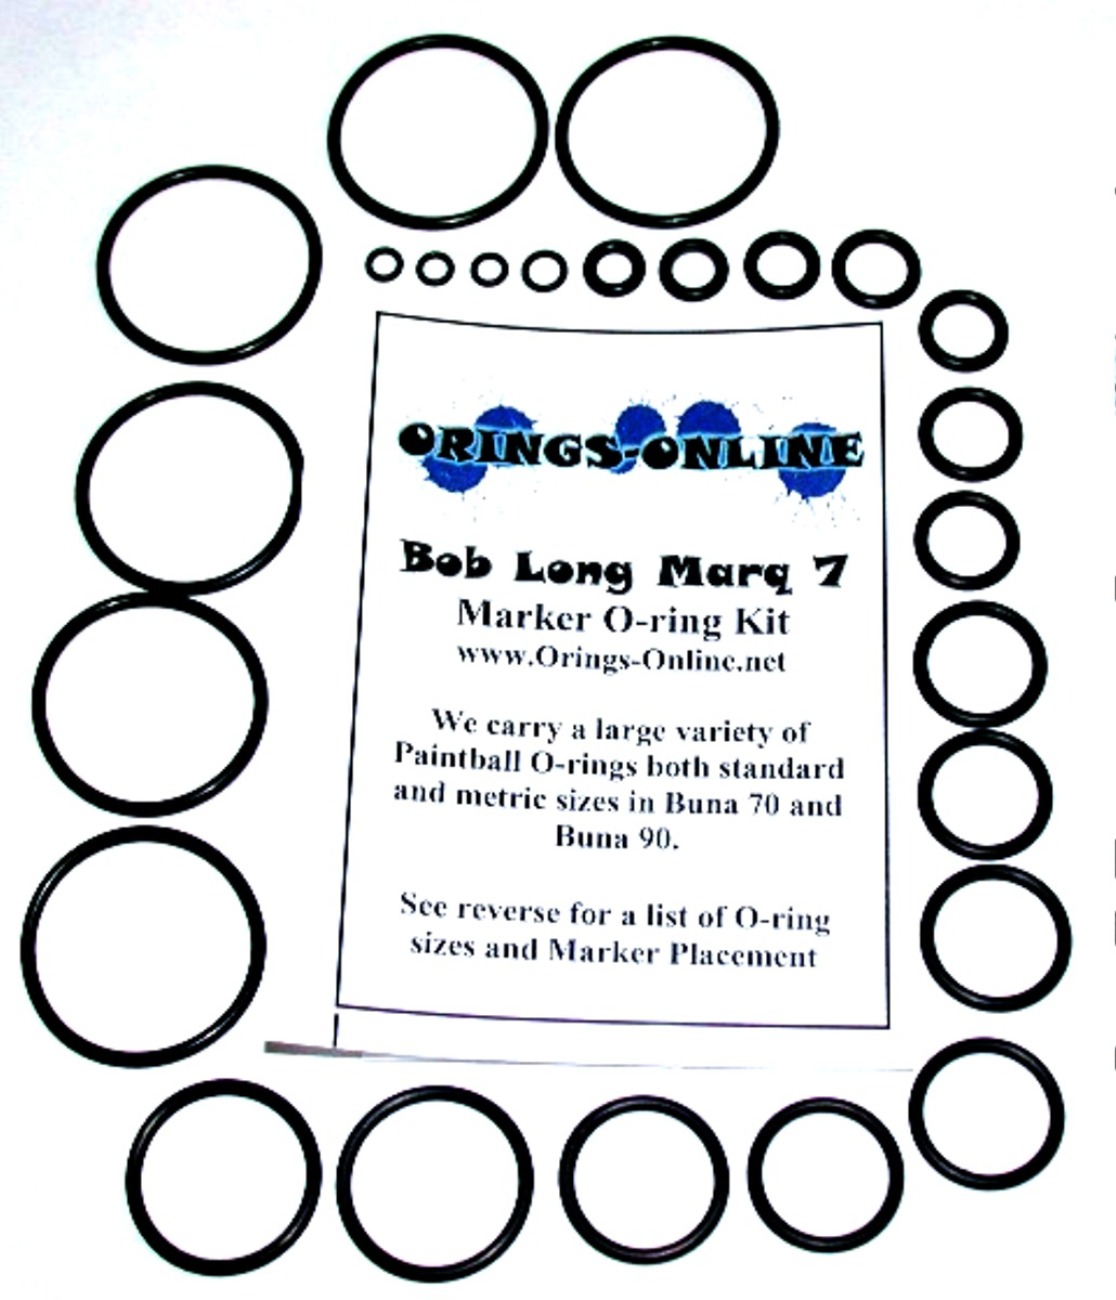 Bob Long Marq 7 Marker O-ring Kit